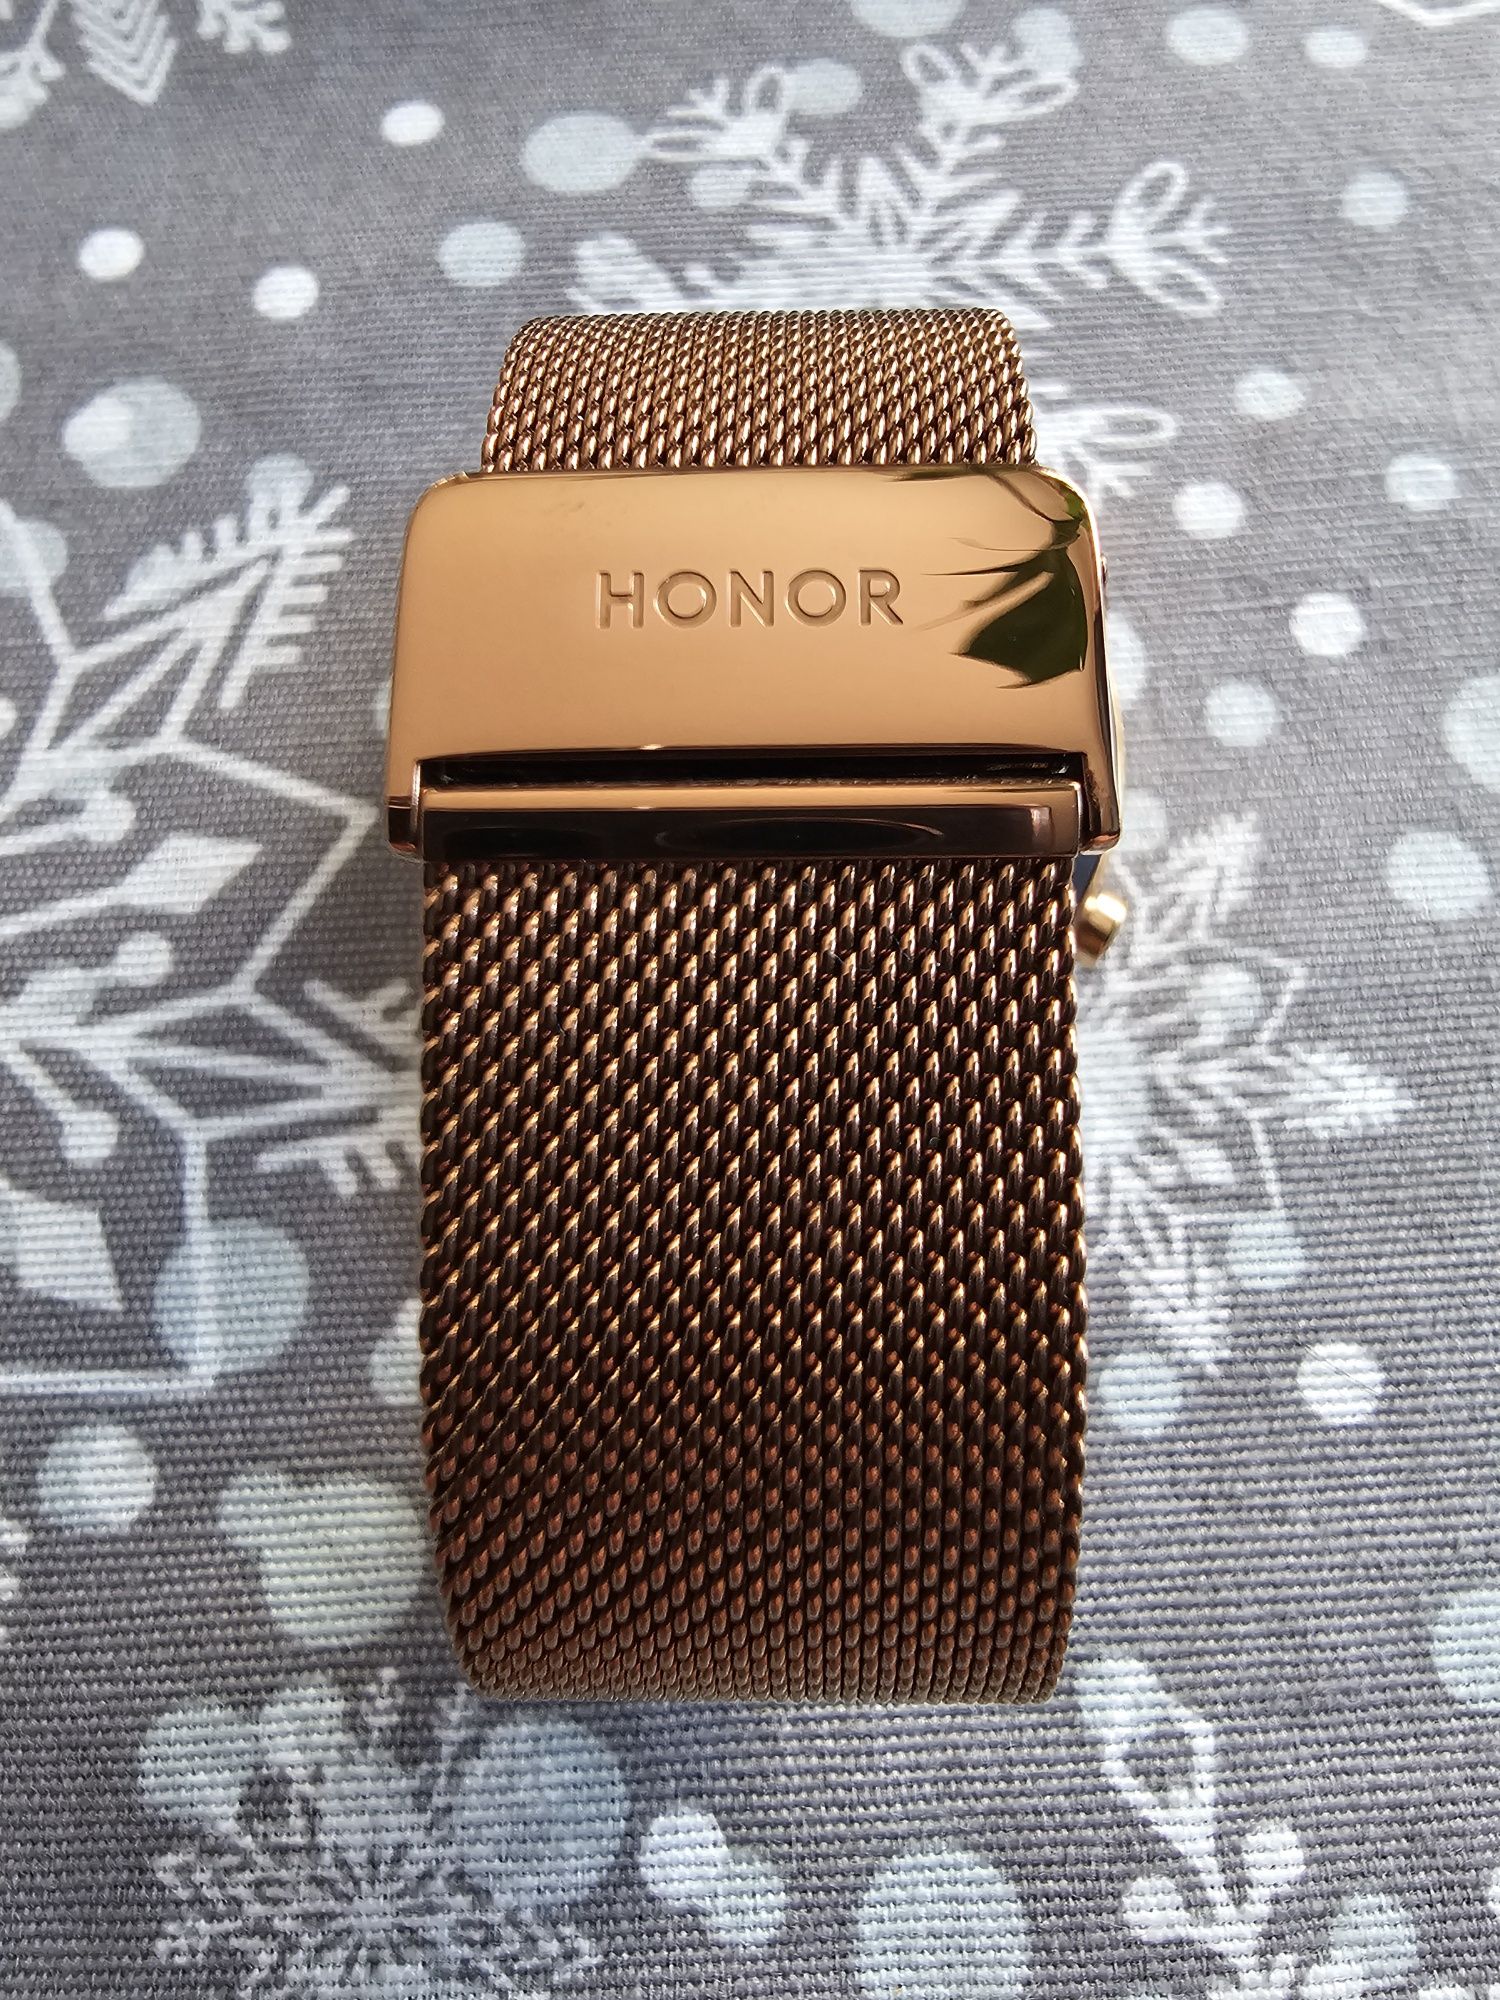 Honor Magic Watch 2 42mm